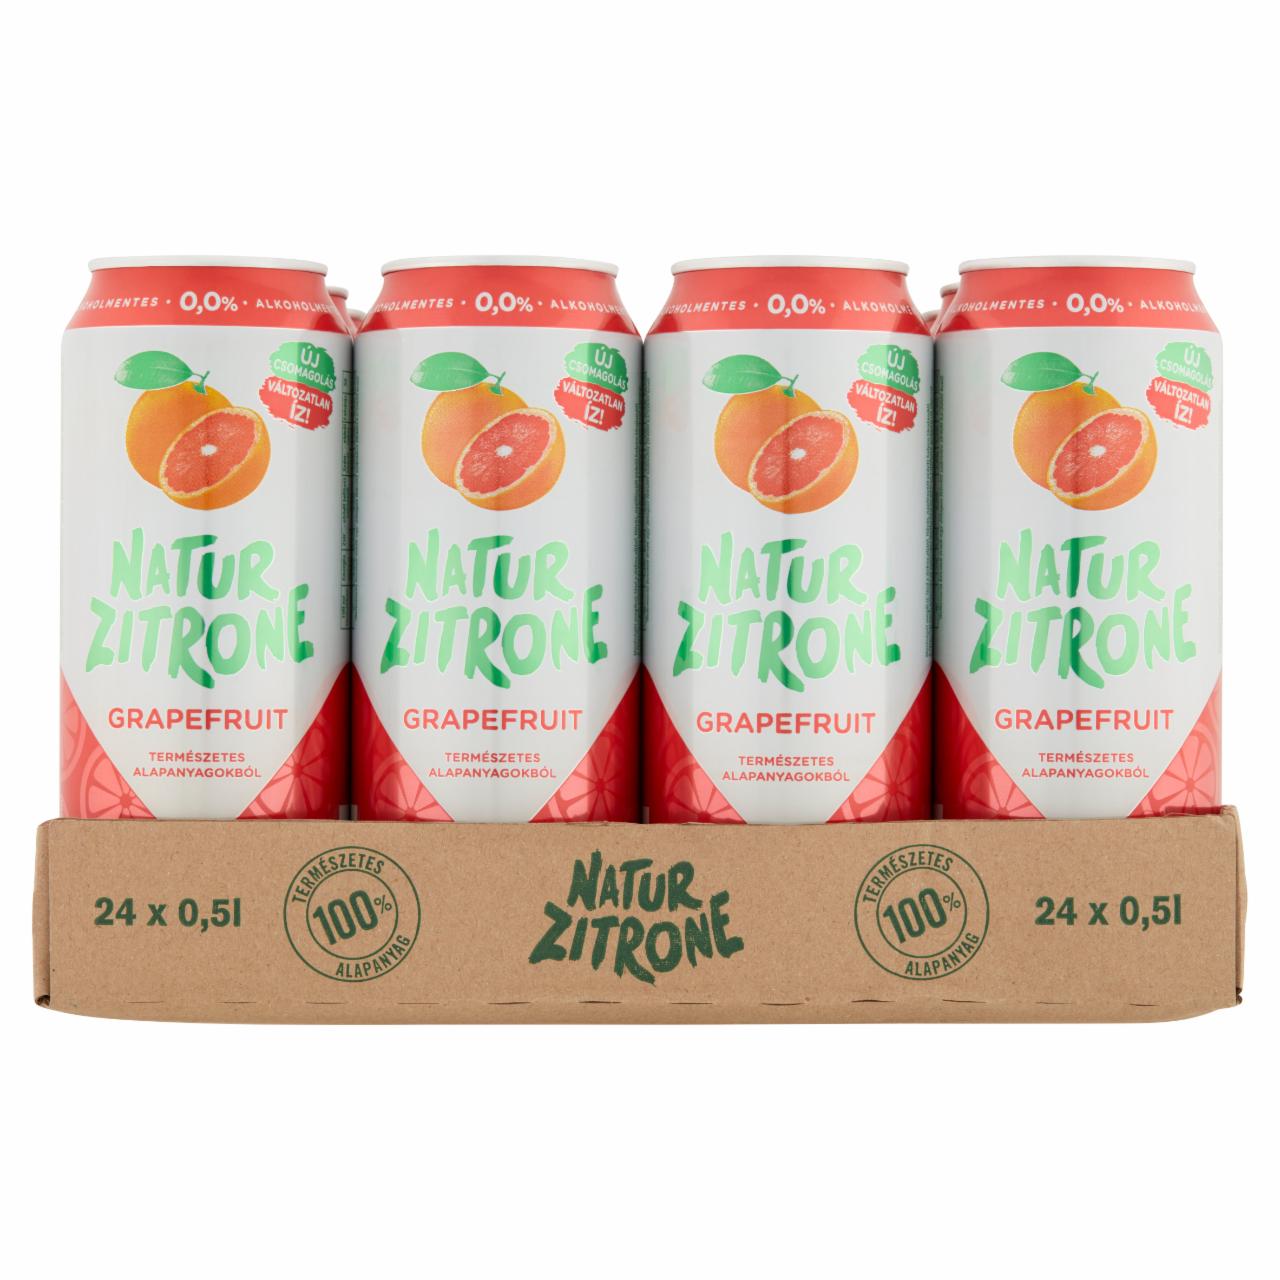 Képek - Natur Zitrone alkoholmentes grapefruitos szénsavas ital tálca 24 x 0,5 l